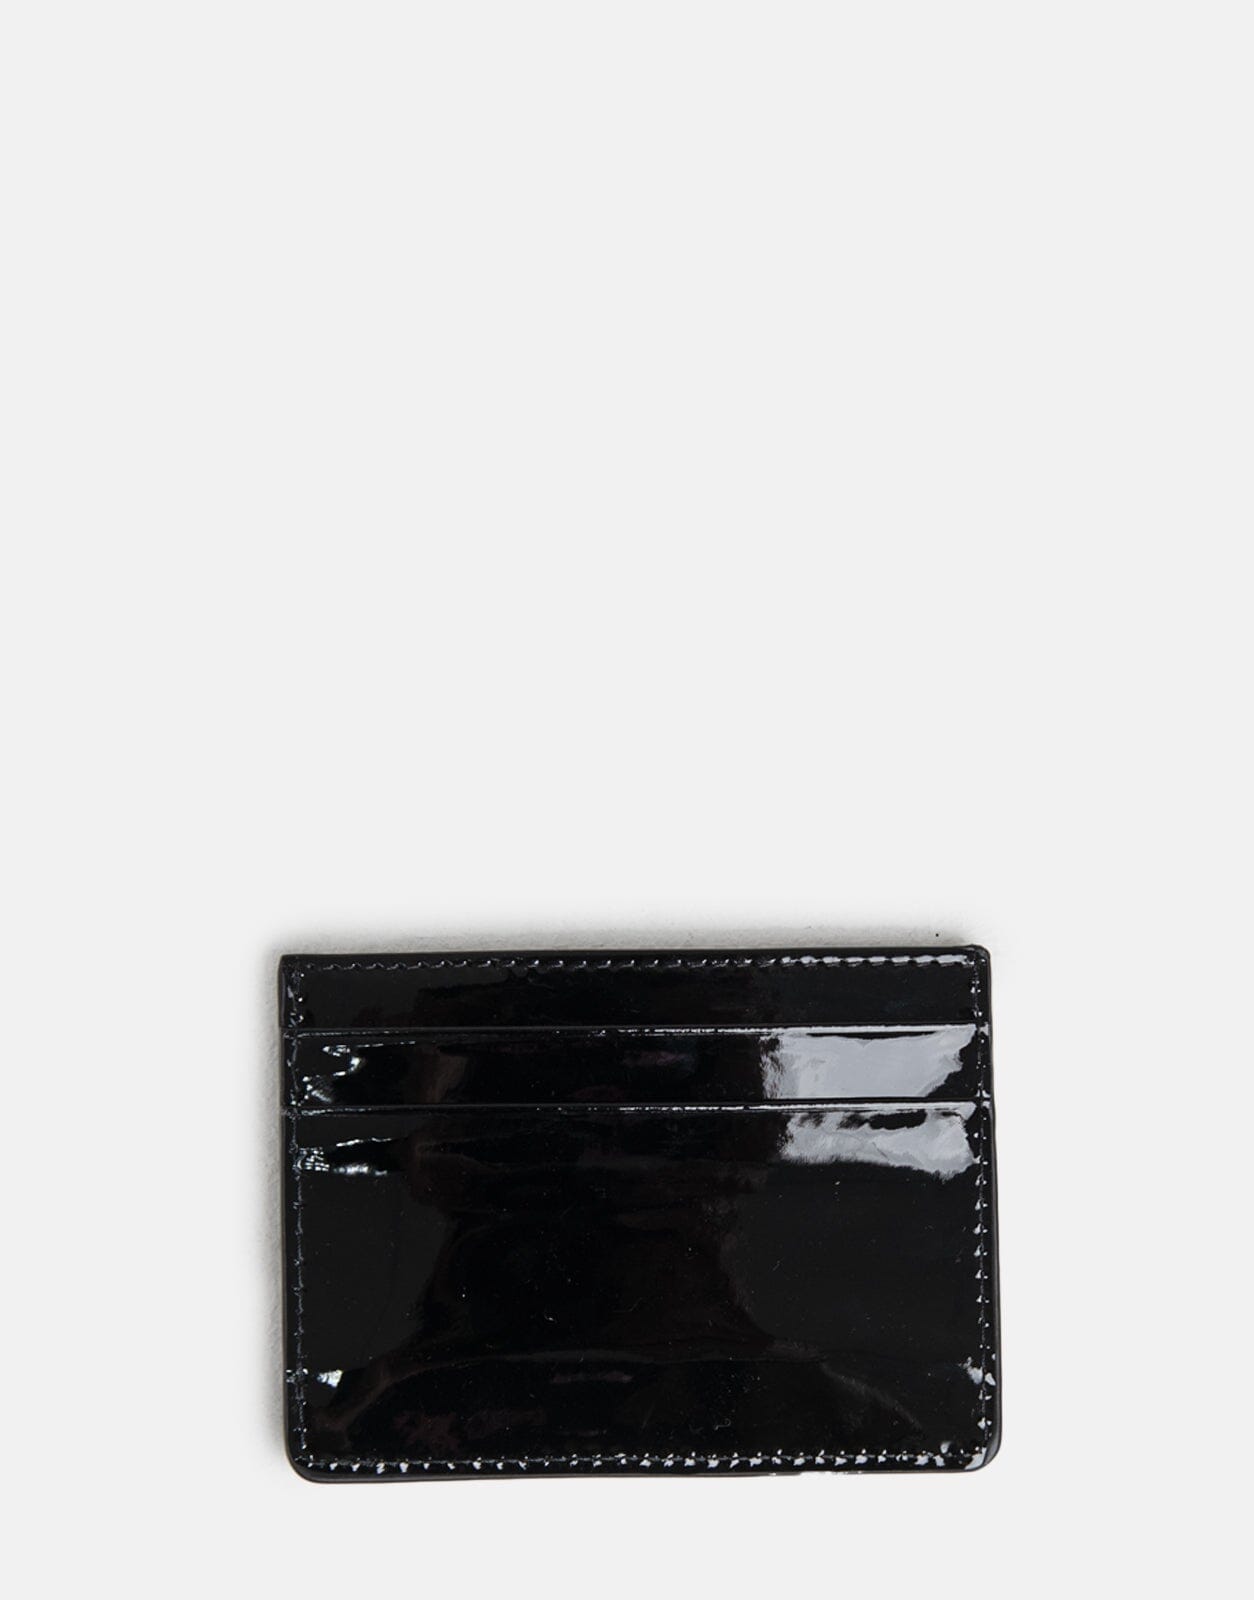 Vialli Patern Black Card Holder - Subwear